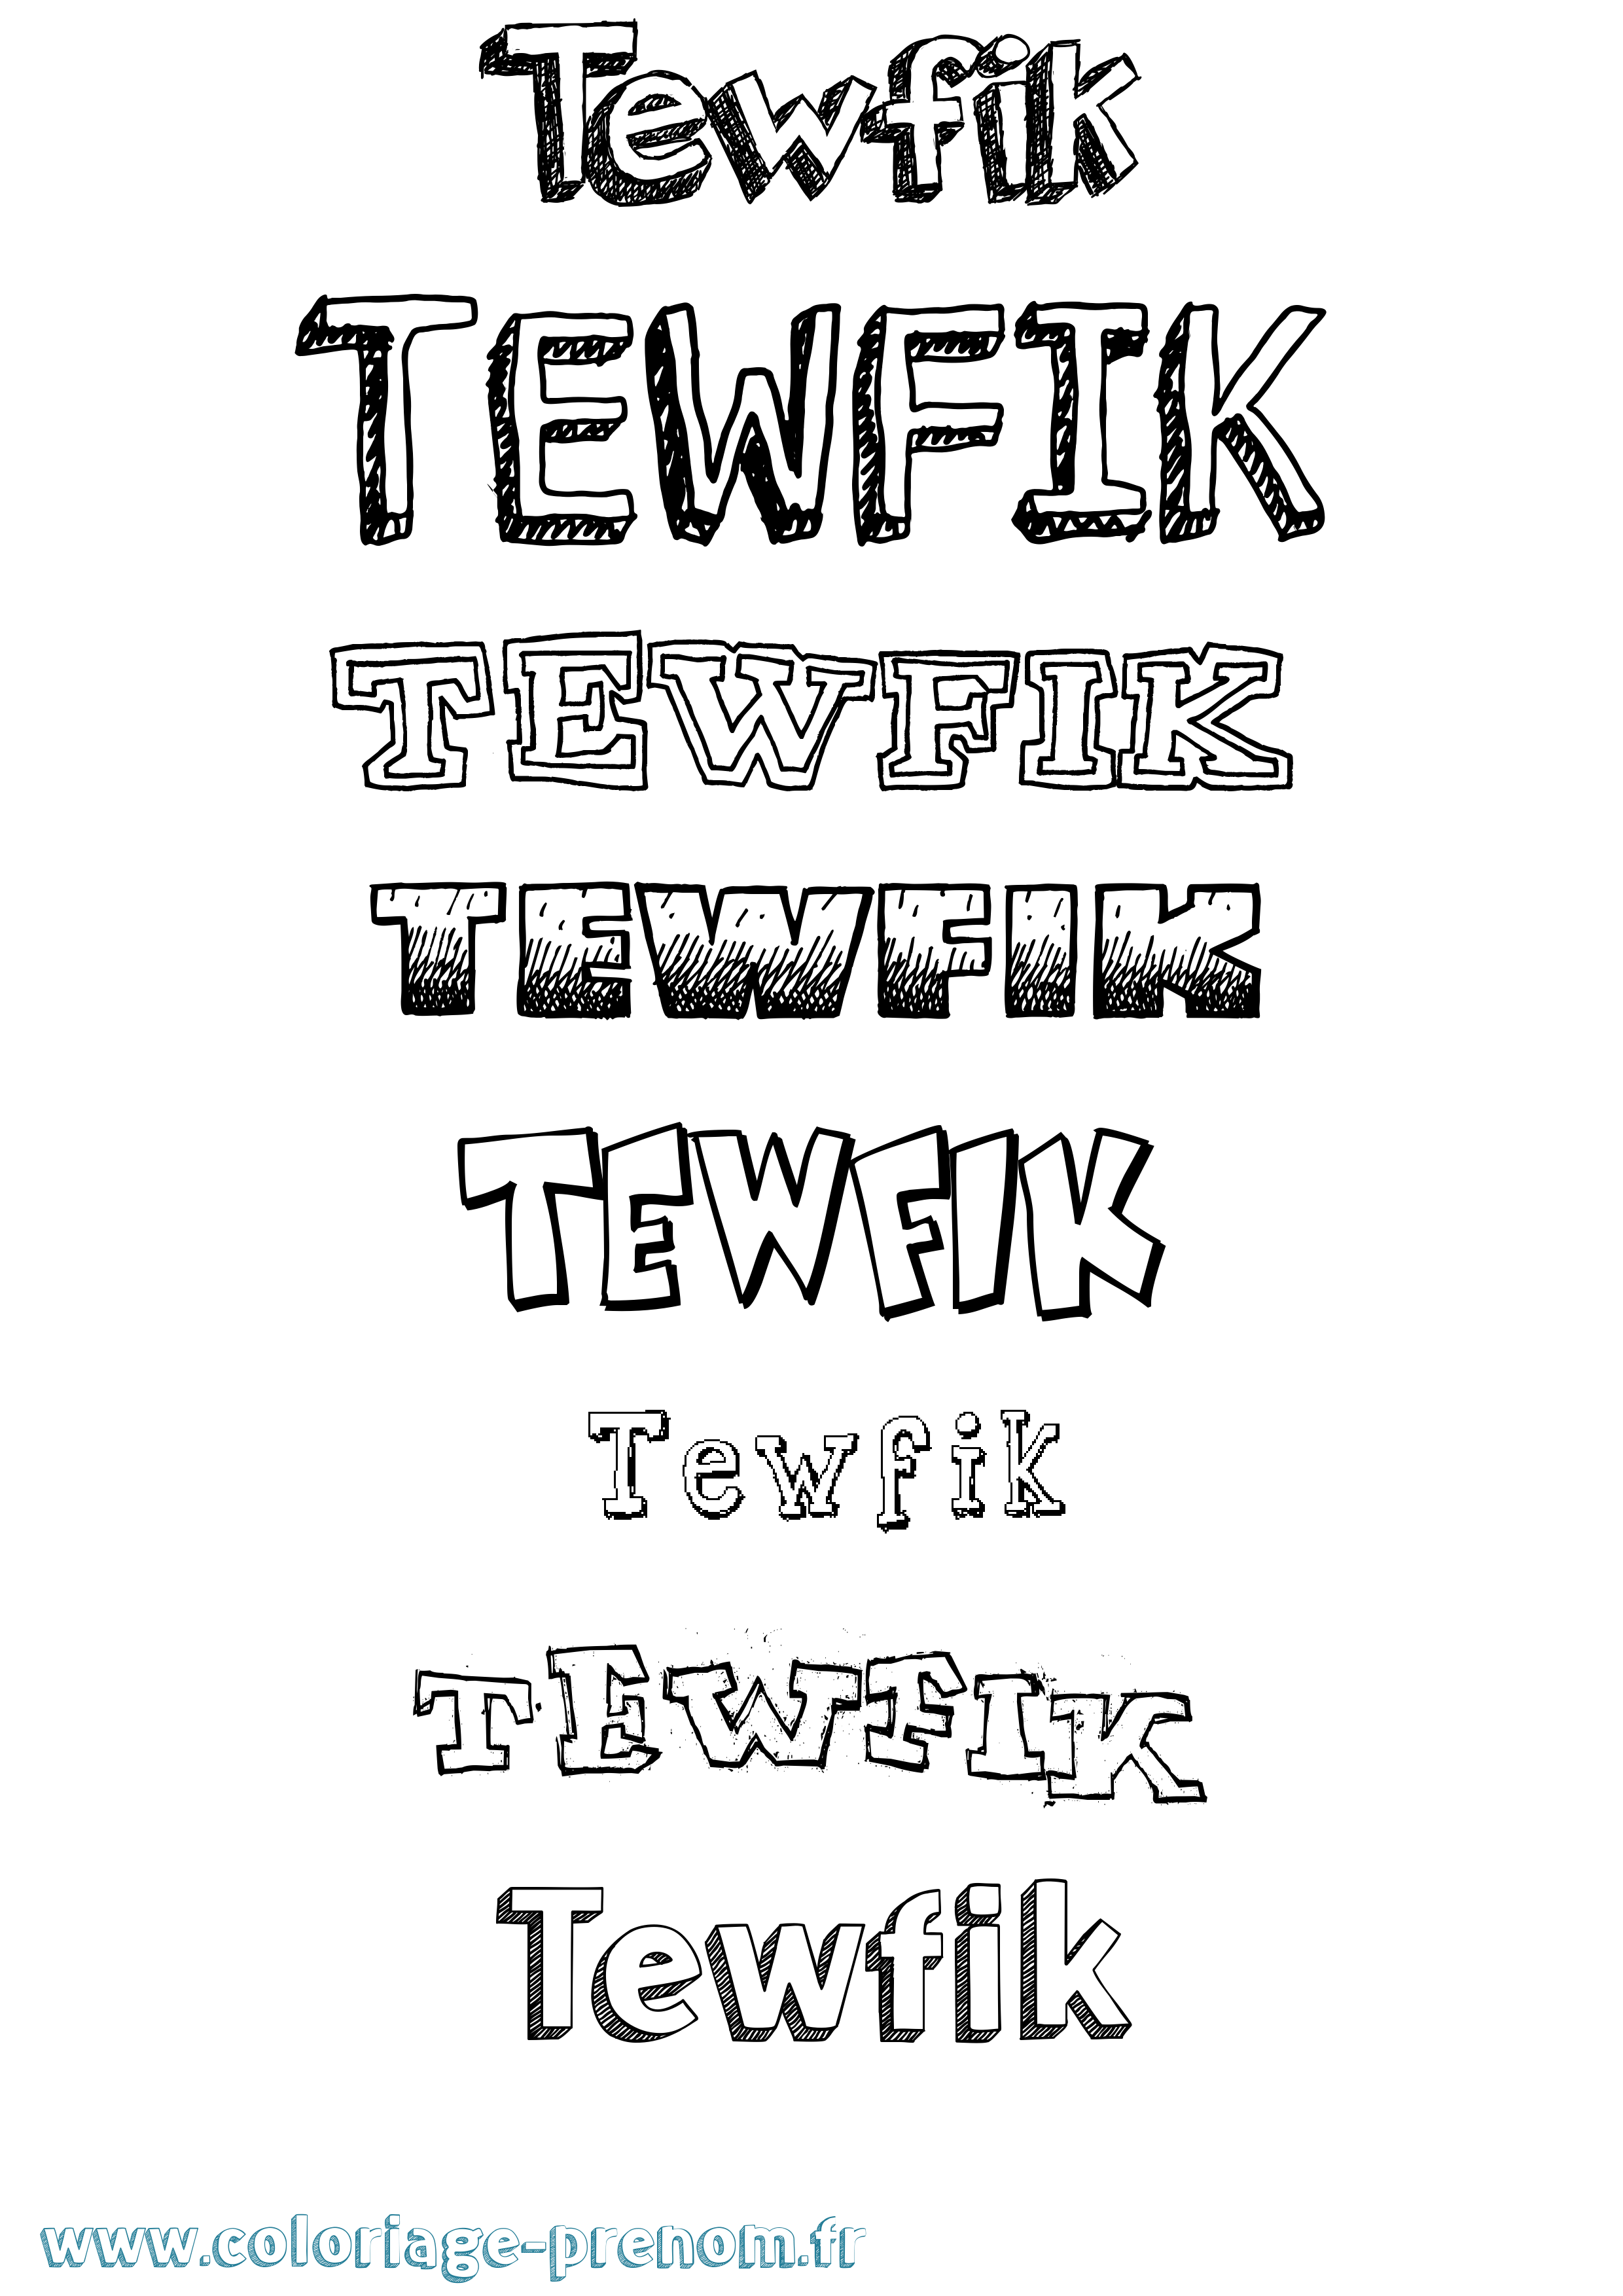 Coloriage prénom Tewfik Dessiné